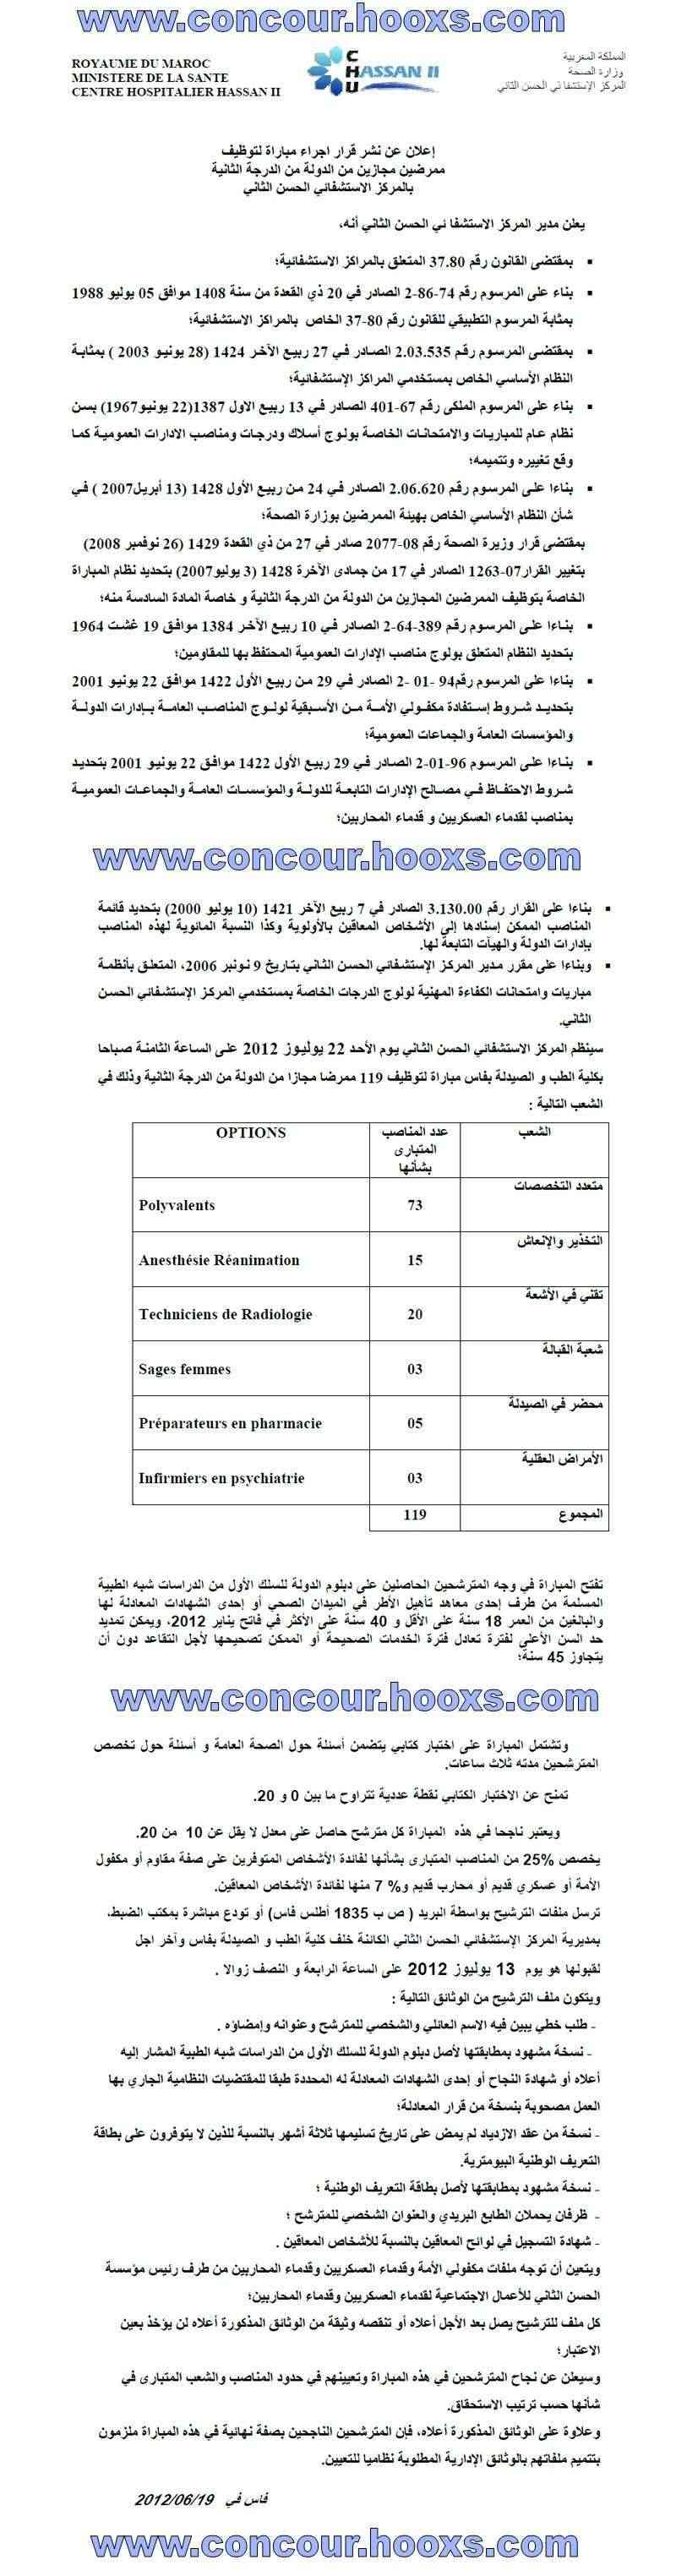 CHU Hassan II - Fès : recrutement des Infirmiers Diplômés d'Etat du 2éme grade avant 13 juillet 2012 Conco166